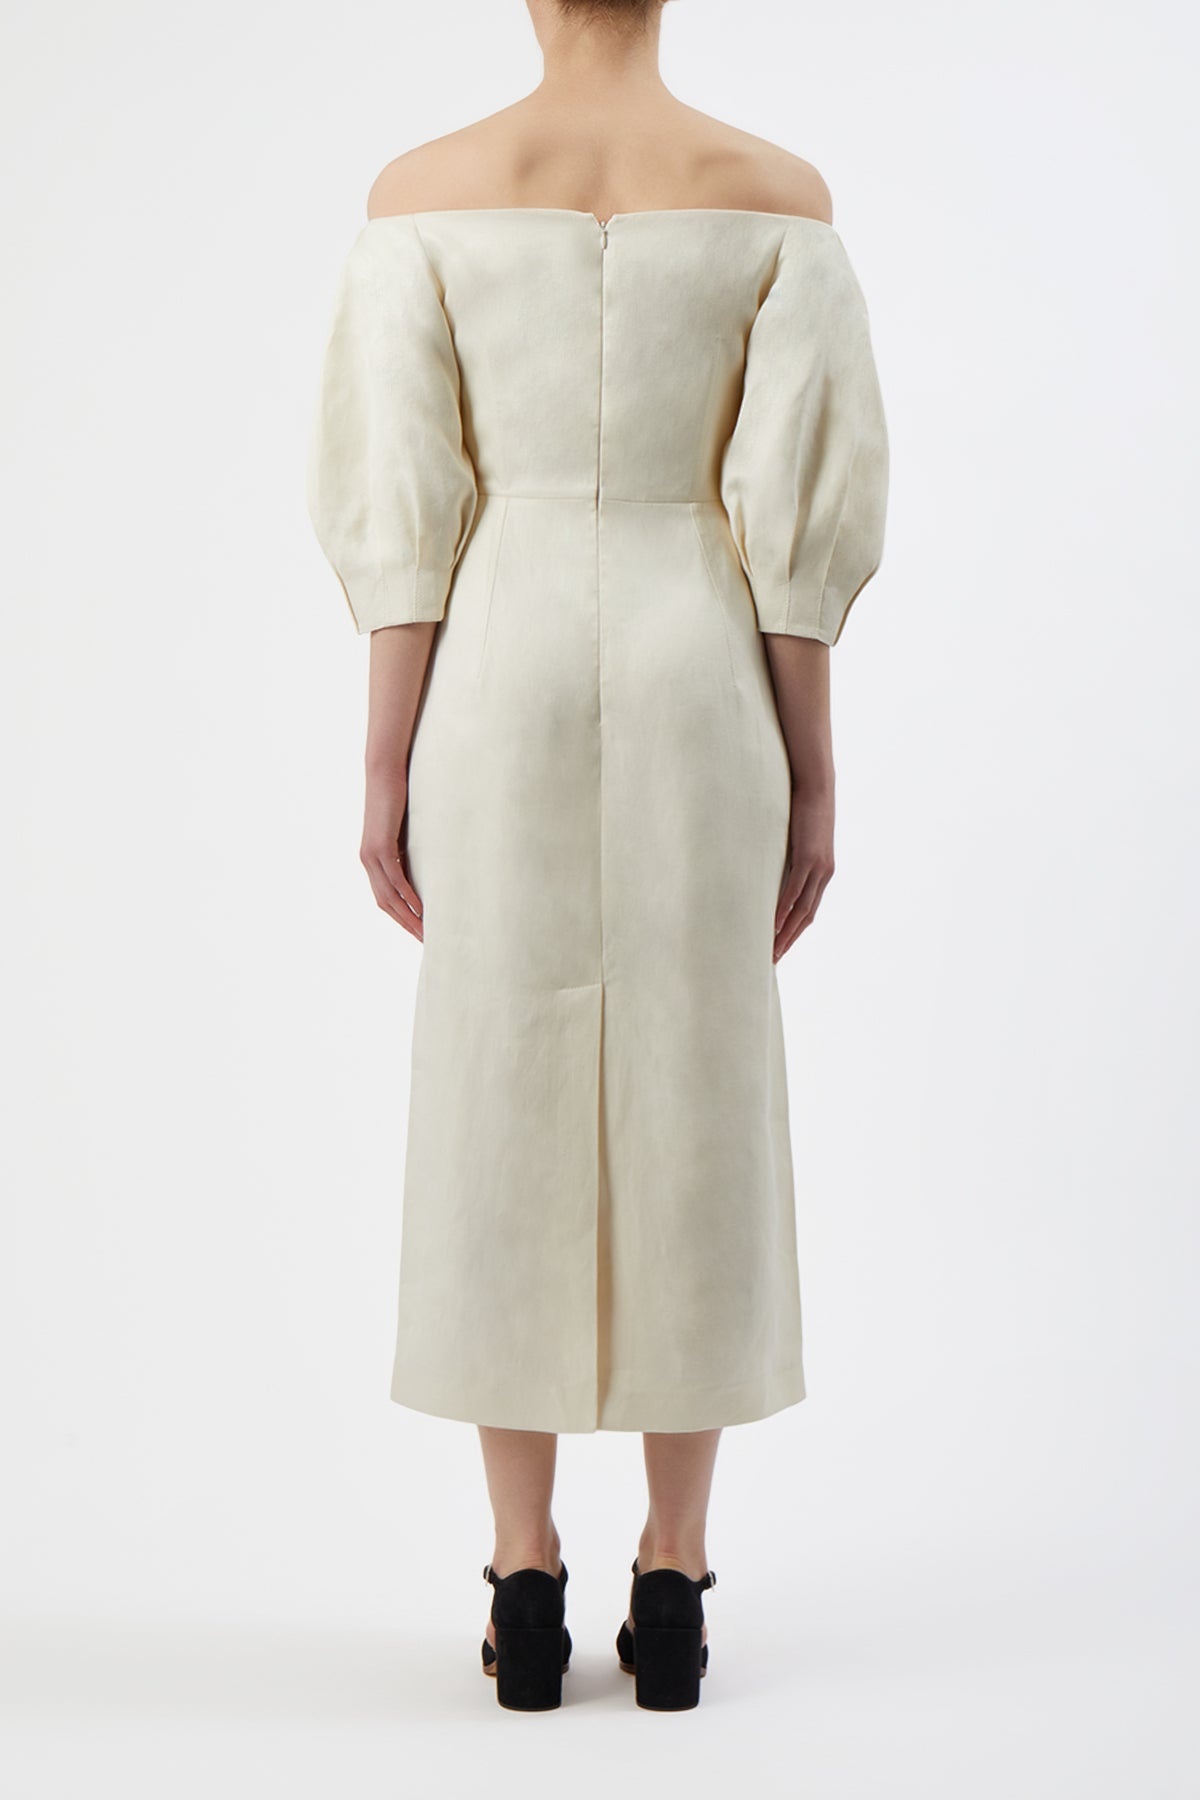 Majano Dress in Hemp Cotton - 4